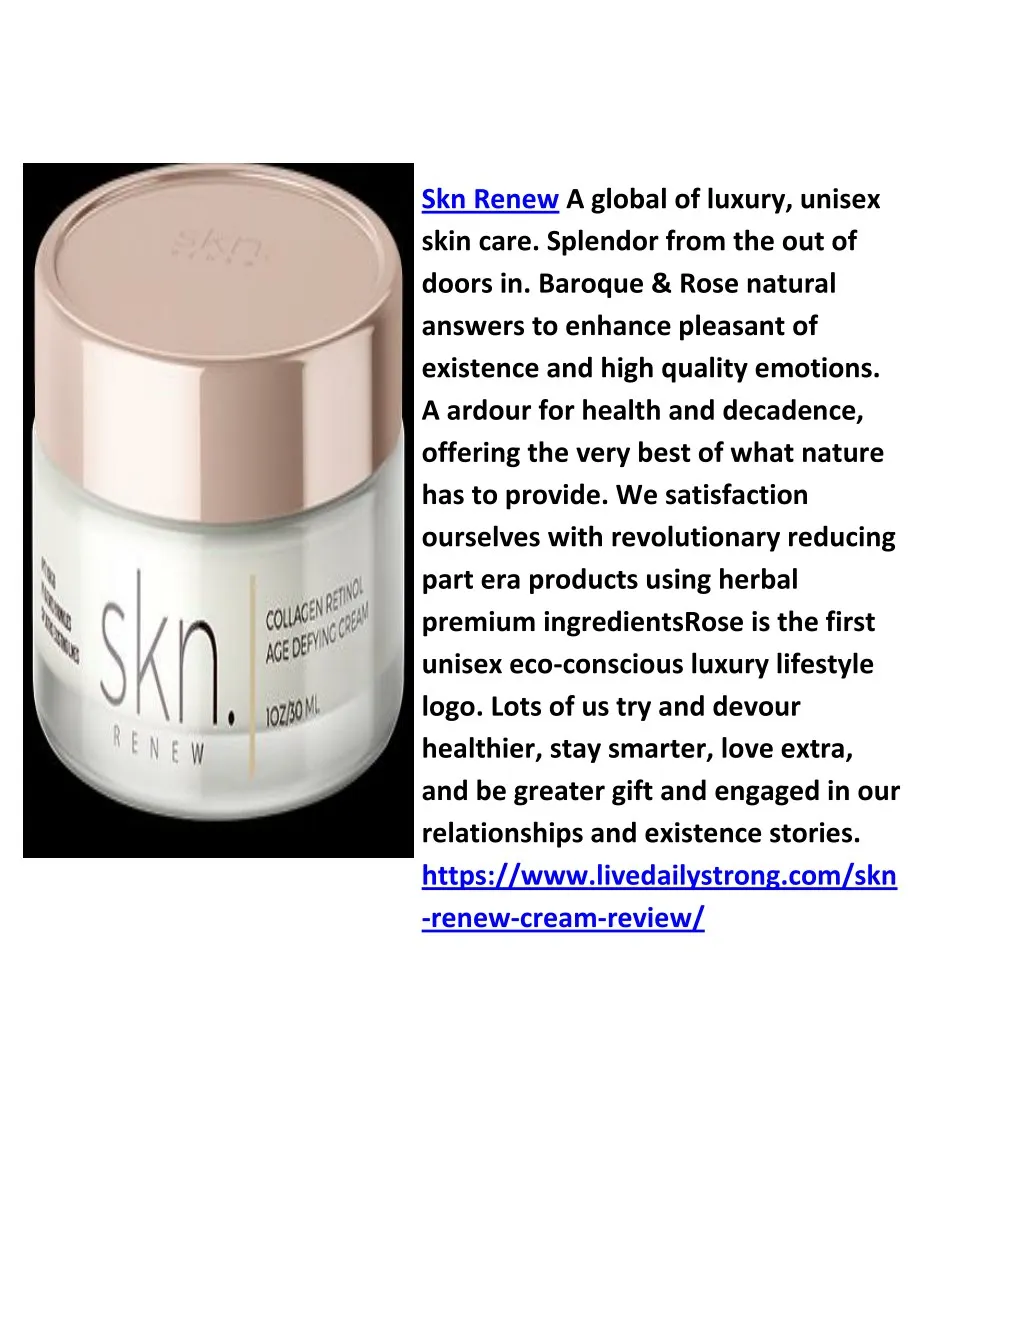 skn renew a global of luxury unisex skin care